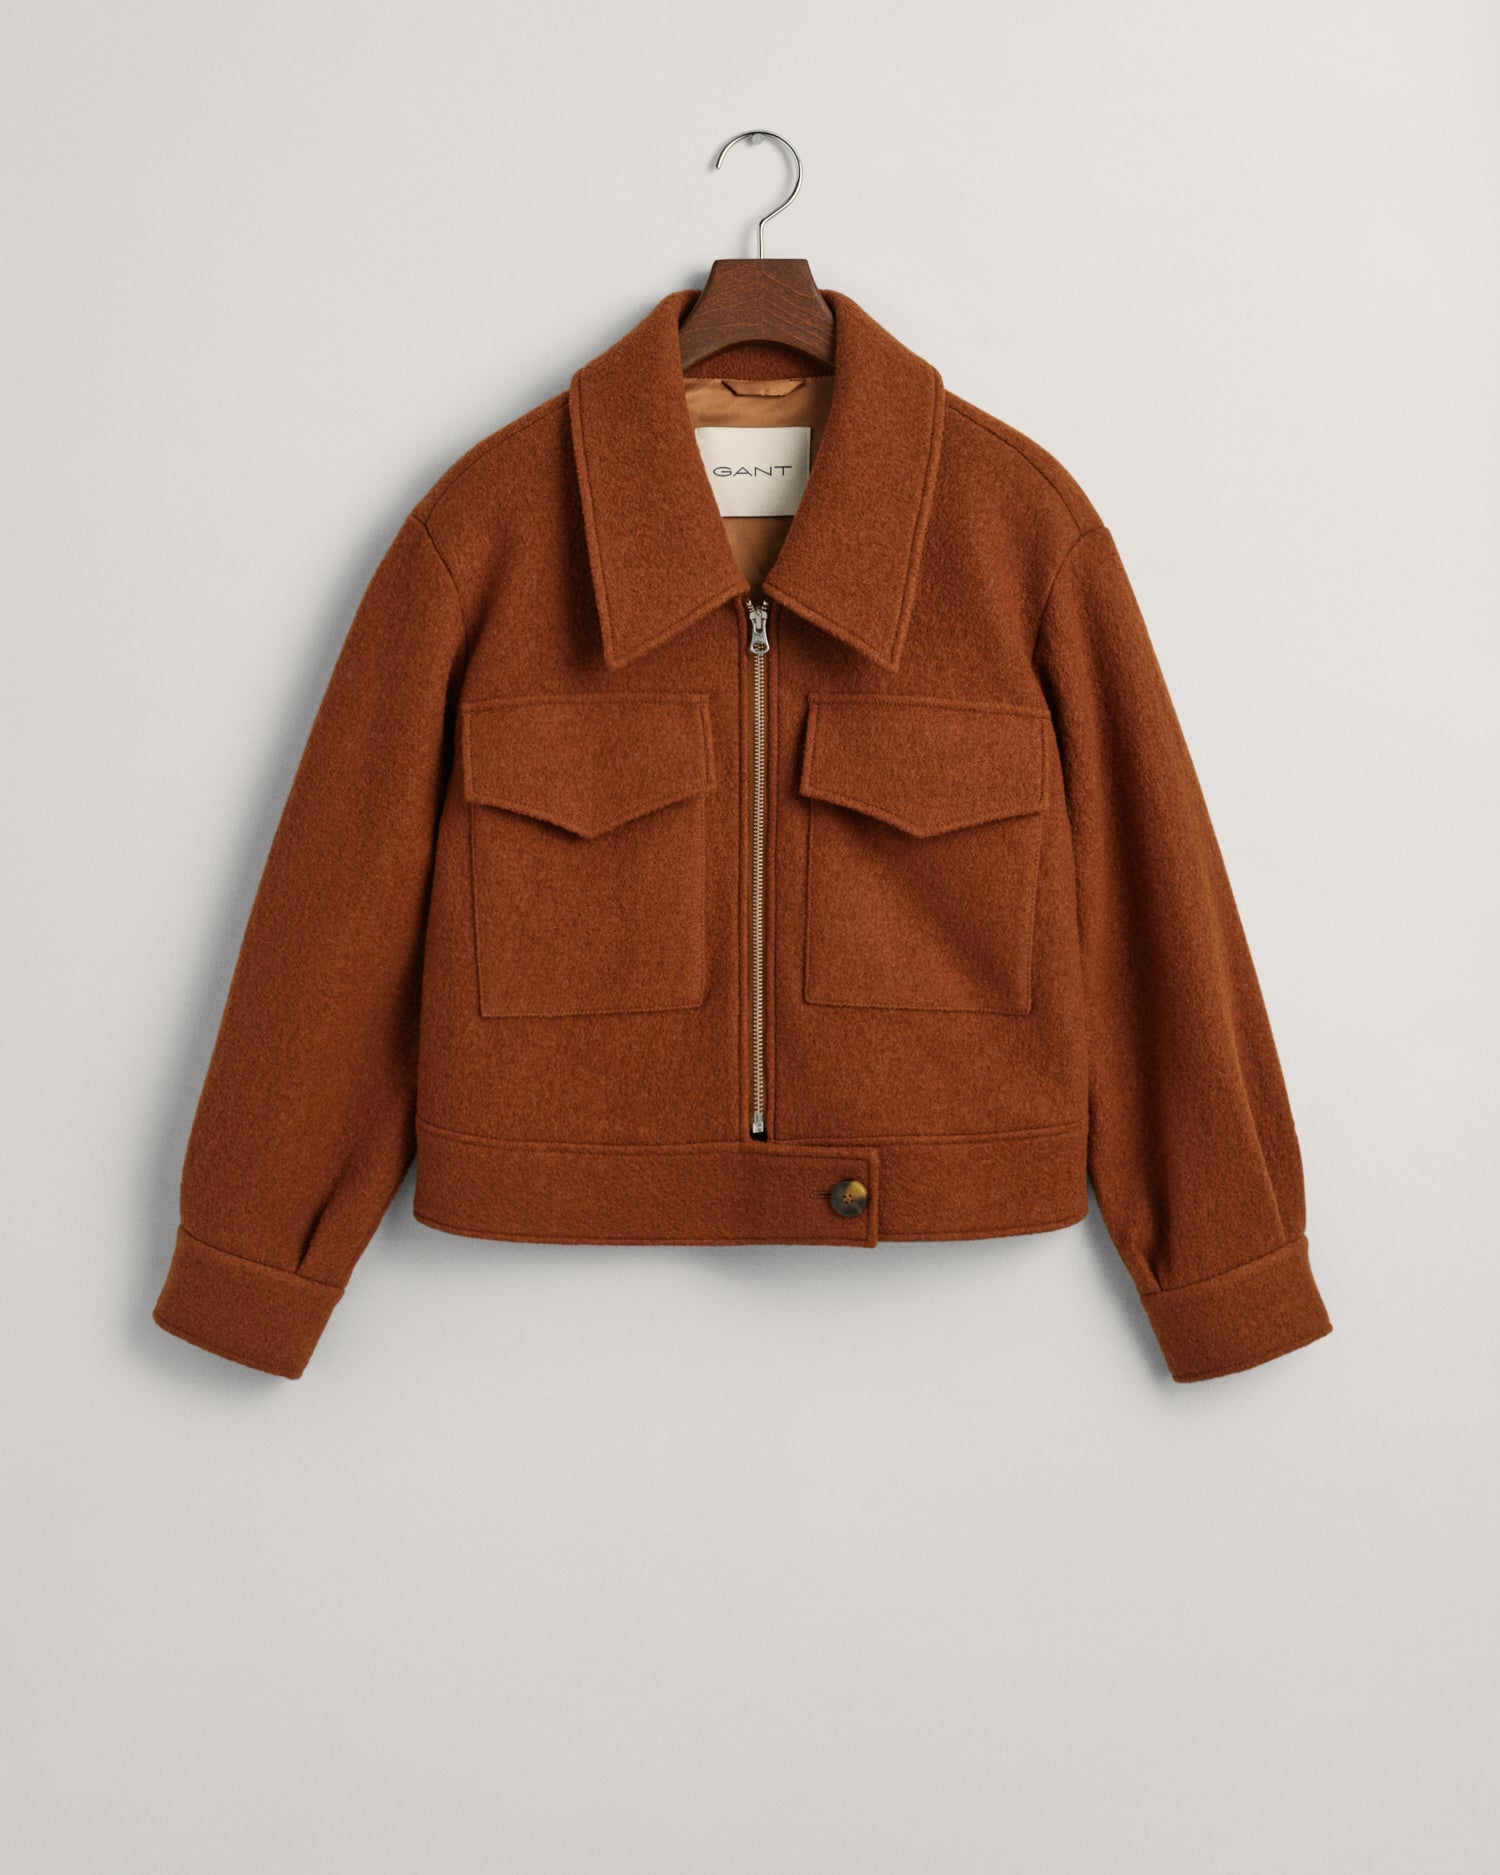 Gant - Boucle Zip Jacket